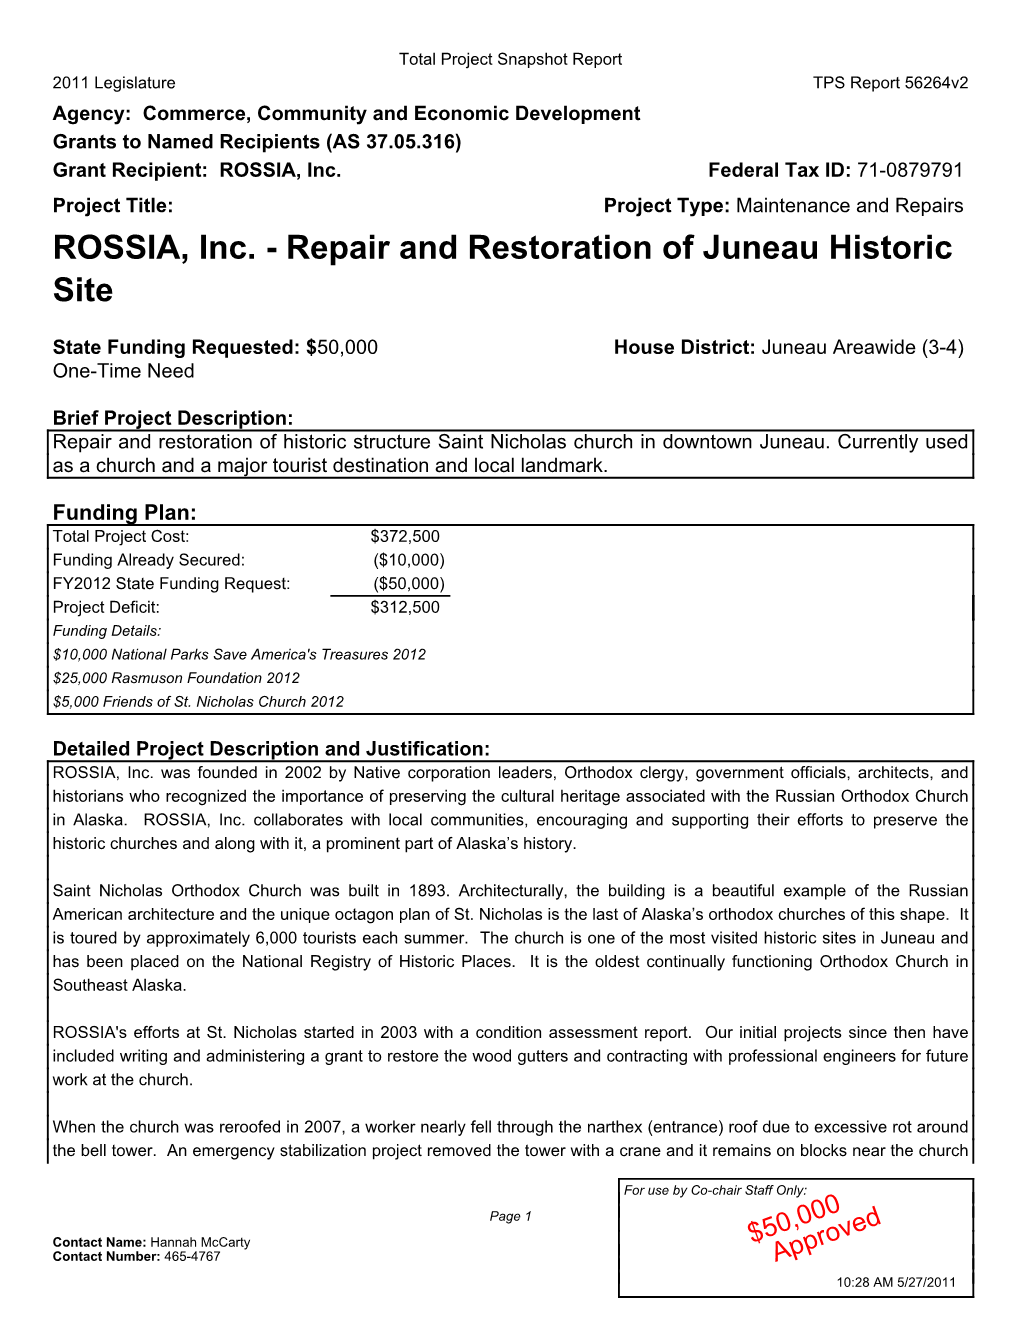 Repair and Restoration of Juneau Historic Site